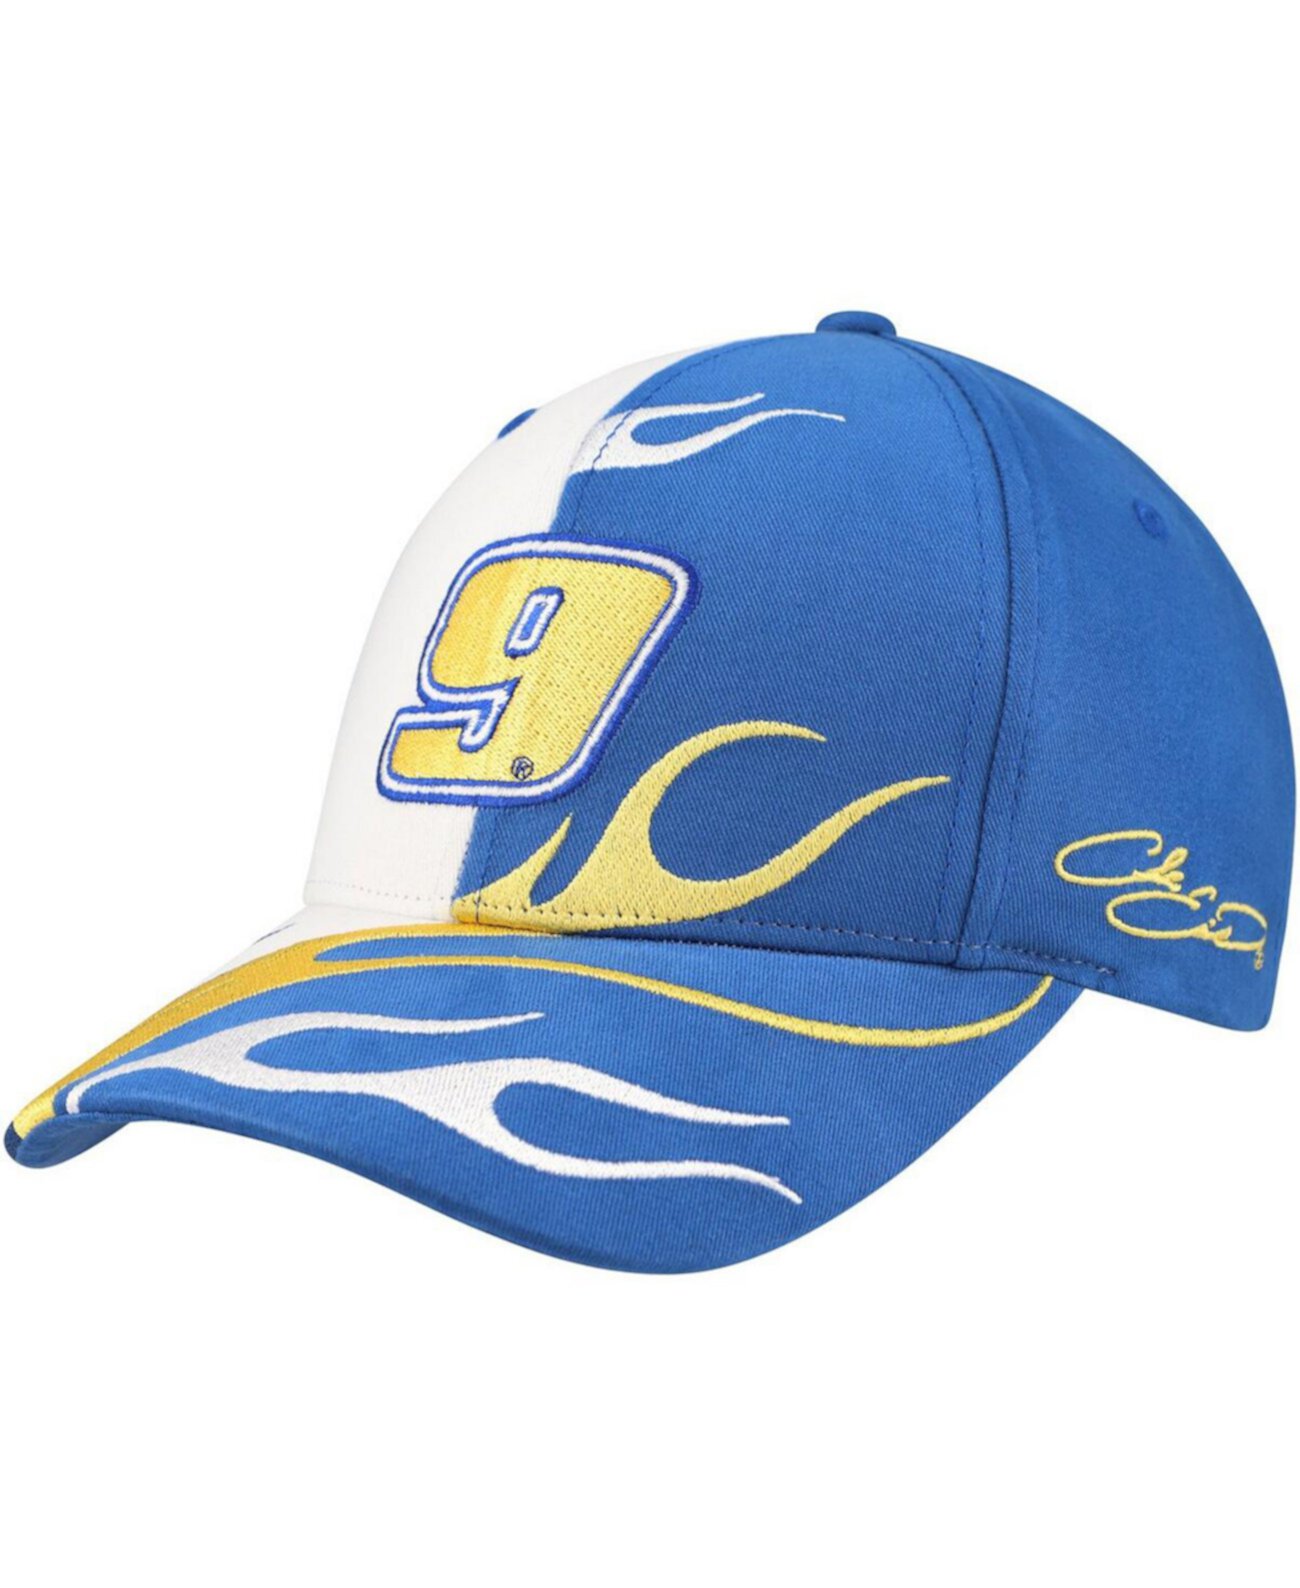 Men's Blue Chase Elliott Flame Adjustable Hat Hendrick Motorsports Team Collection